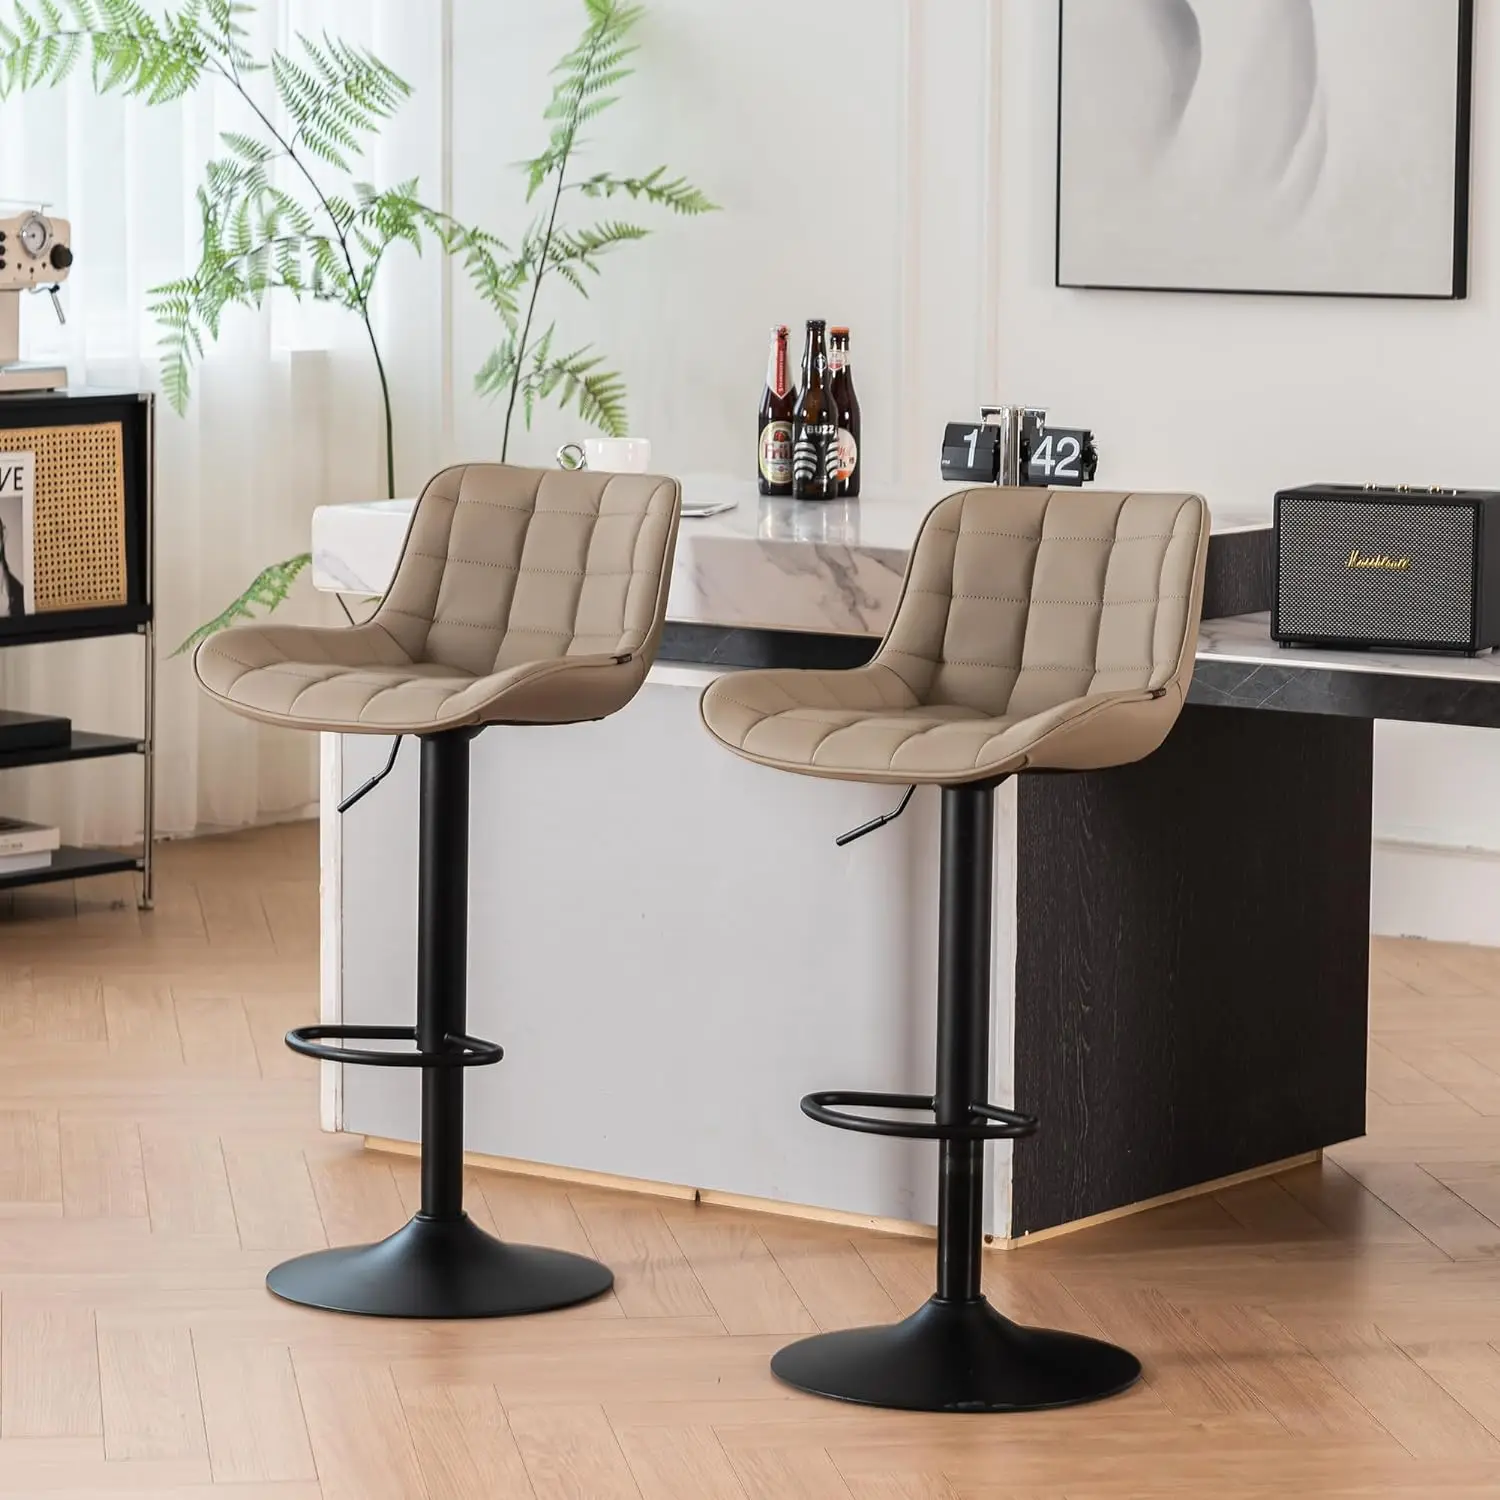 

YOUTASTE Khaki Bar Stools Set of 2 Counter Height Bar Stool with Back, PU Leather Upholstered Barstools Modern Adjustable